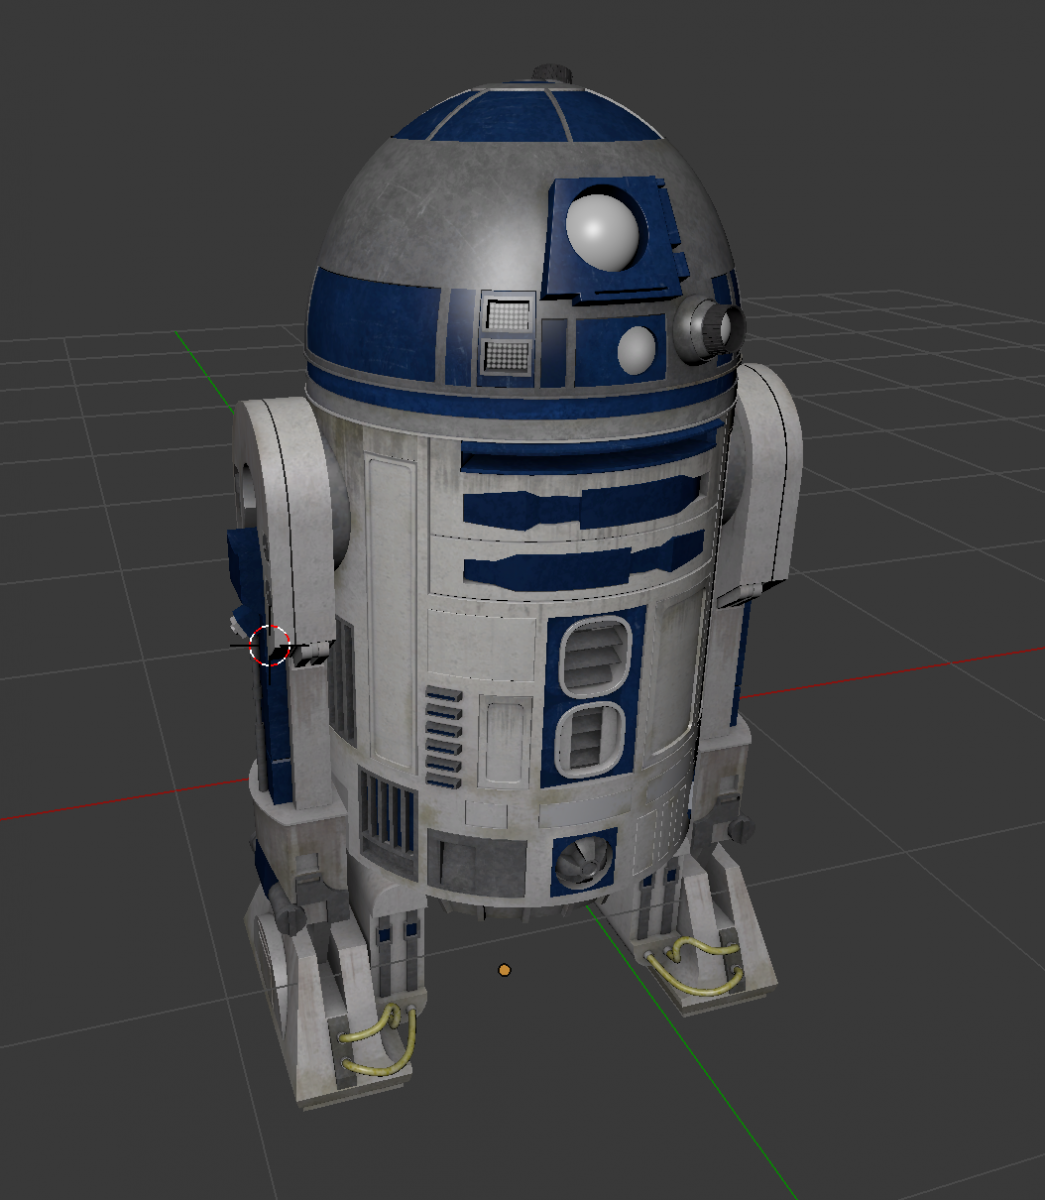 Render 3D Star Wars: The Force Awakens models in Blender and Three.js ...